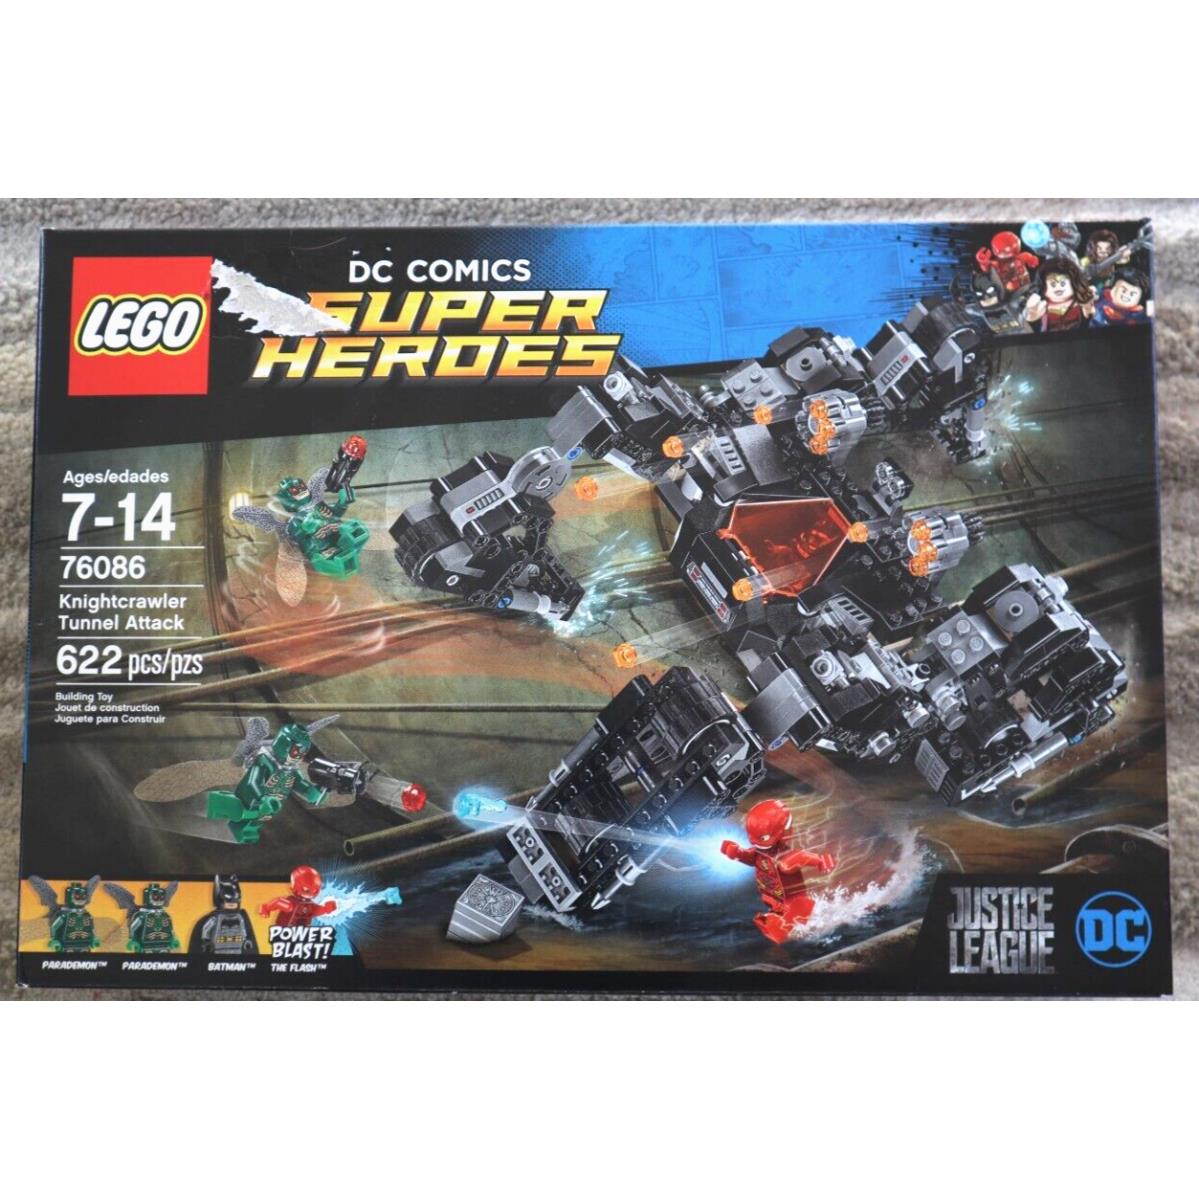 Lego 76086 Knightcrawler Tunnel Attack DC Comics Super Heroes Batman Flash